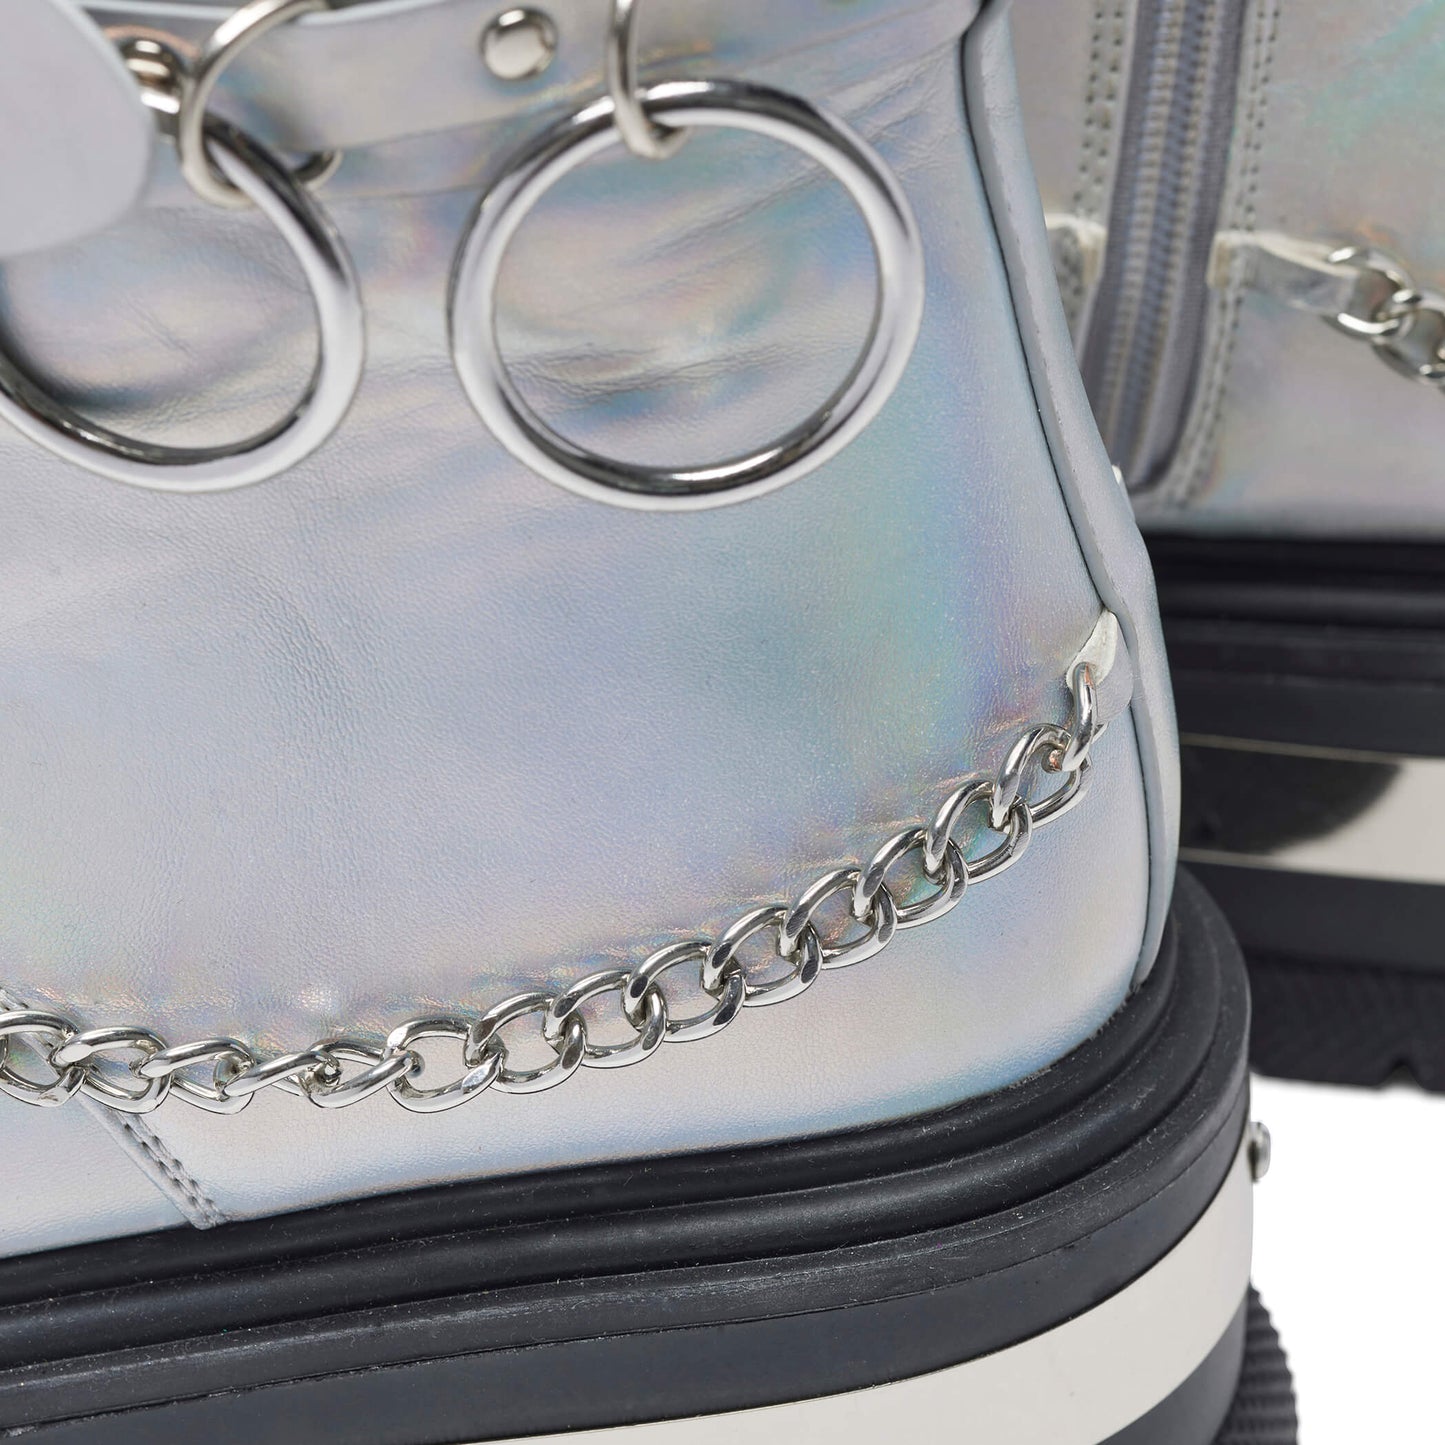 Borin Hardware Platform Boots - Silver Hologram - KOI Footwear - Chain Detail